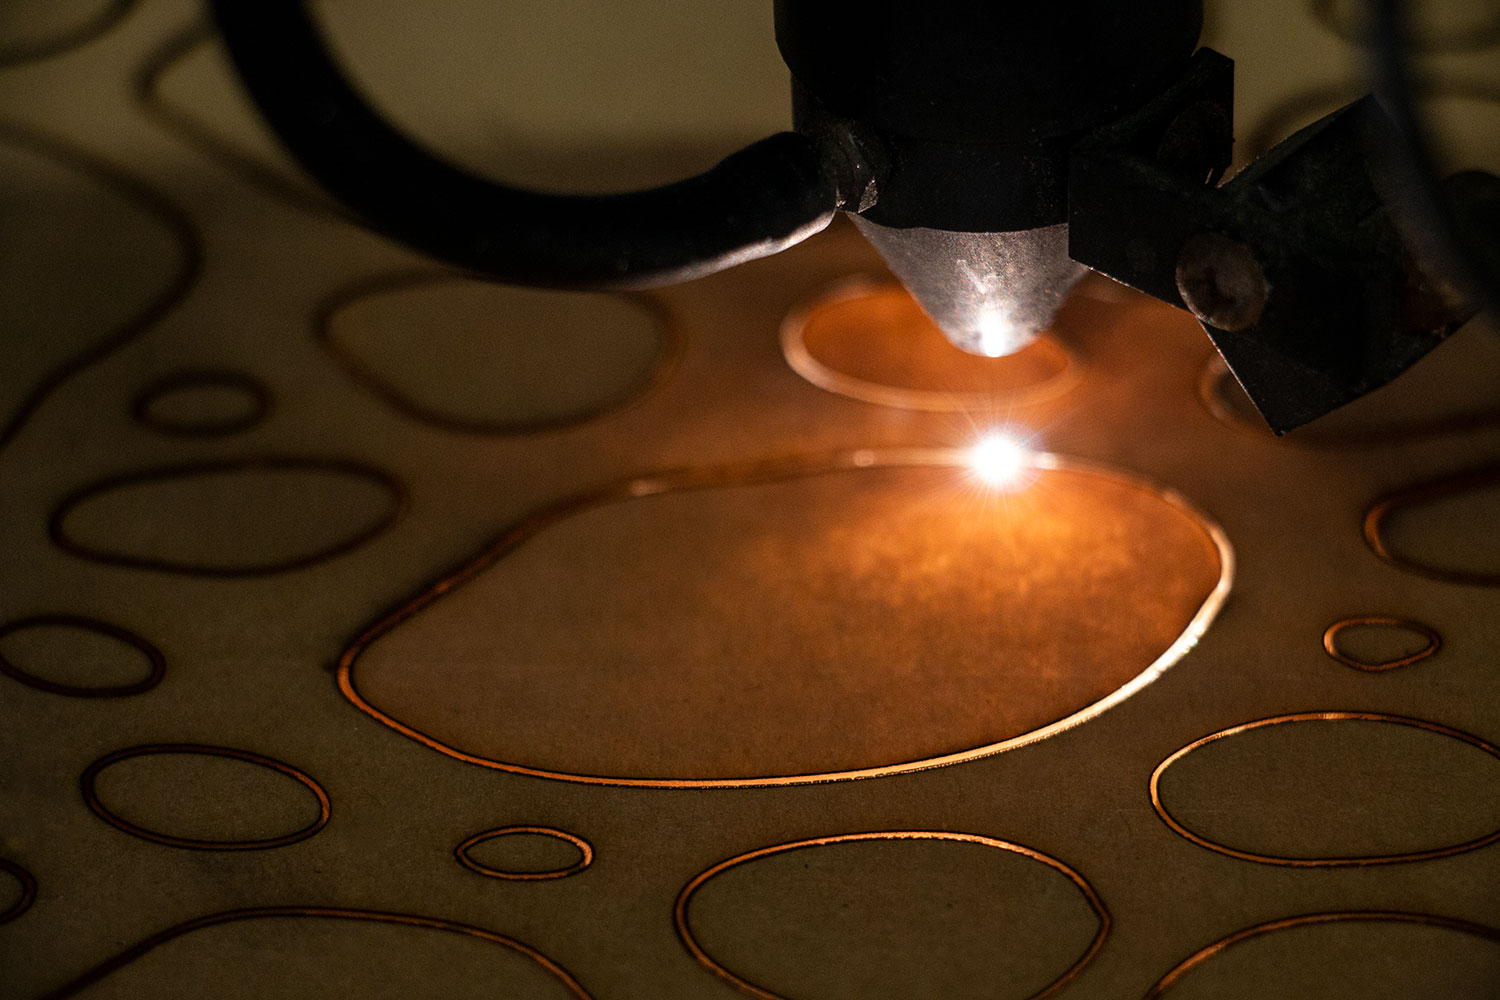 laser machine cutting irregular circles into wood.